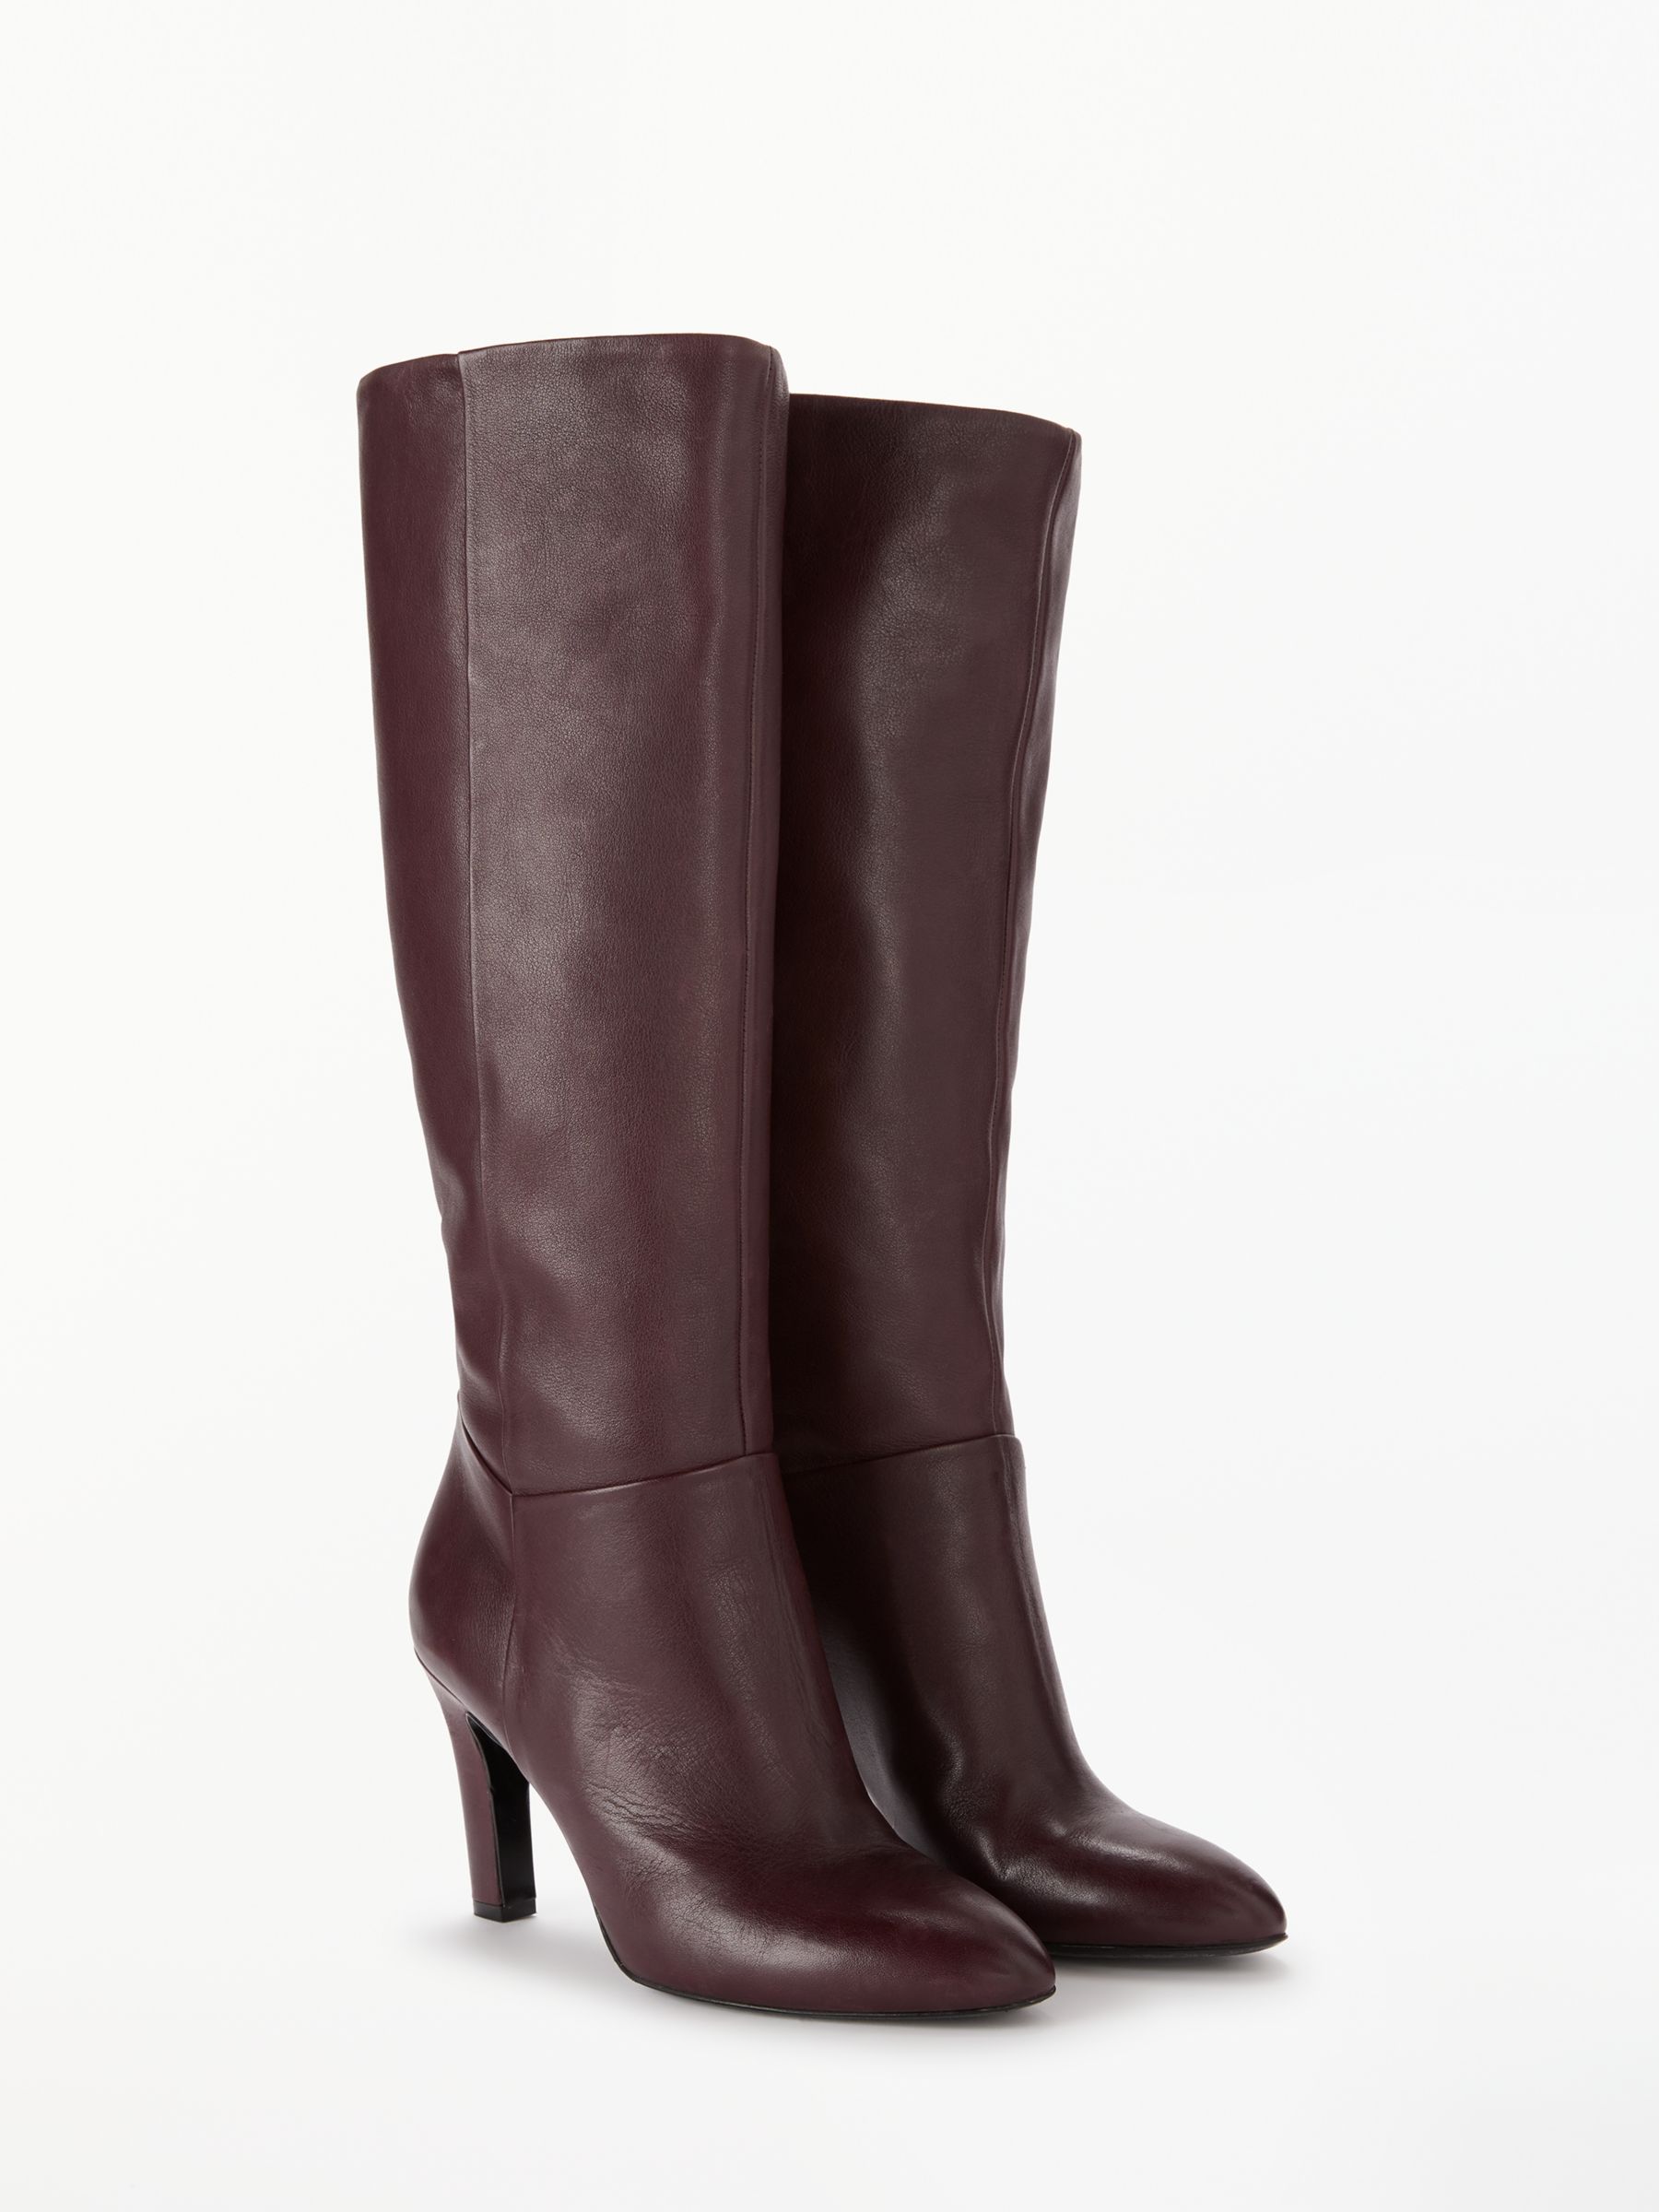 burgundy knee length boots